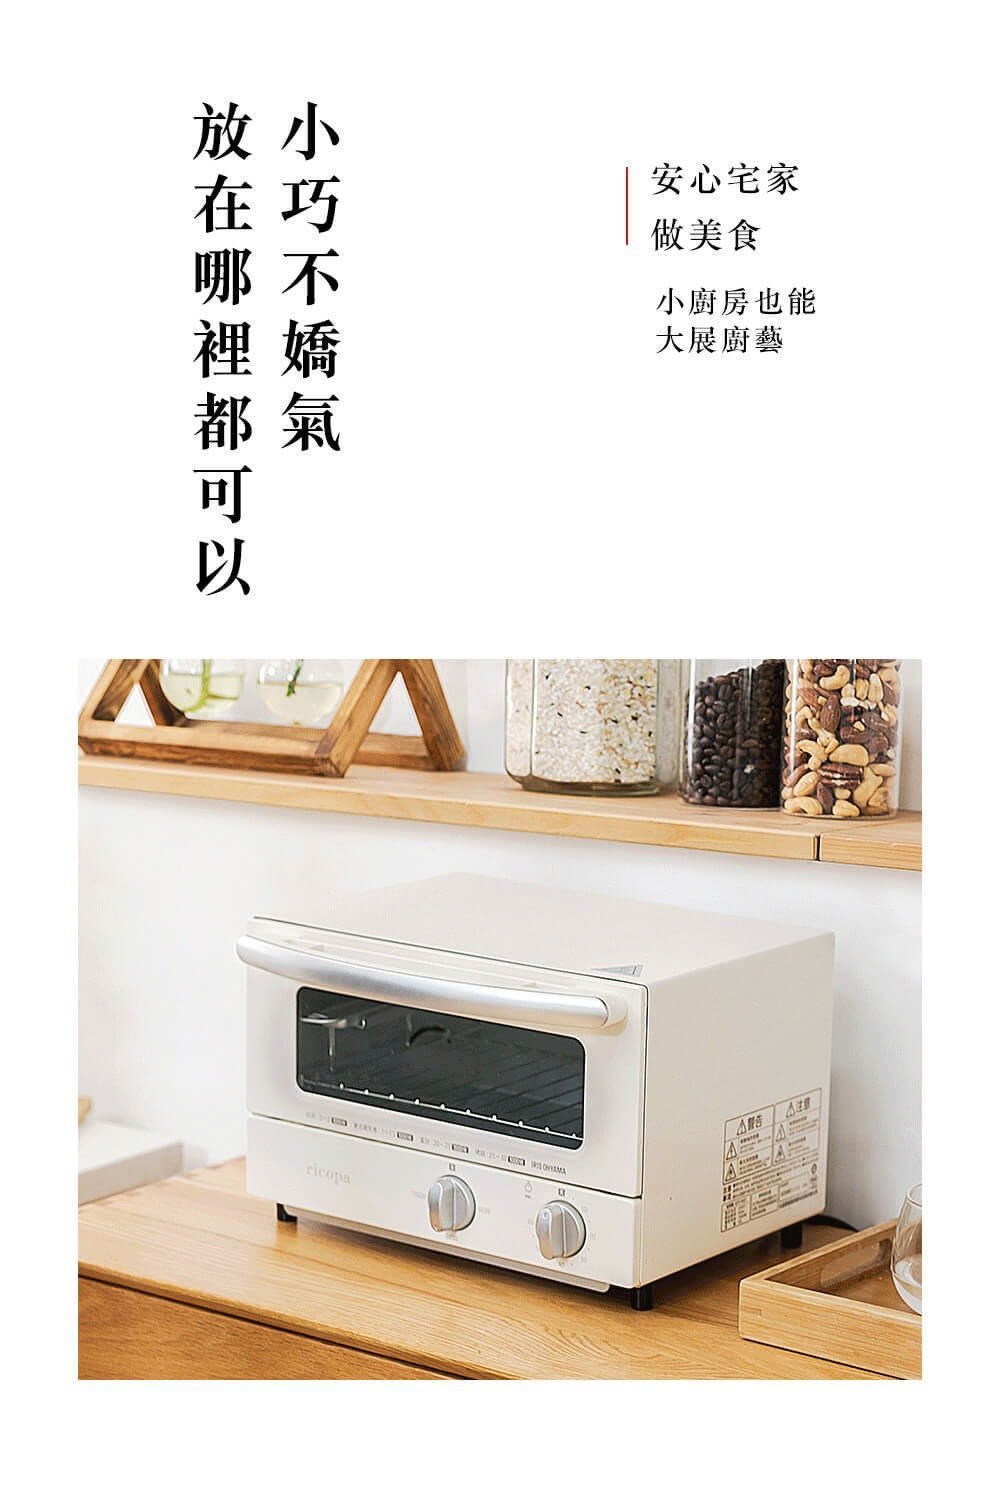 IRIS - Ricopa Mini Oven EOT-R021 (Pink) [Licensed in Hong Kong]